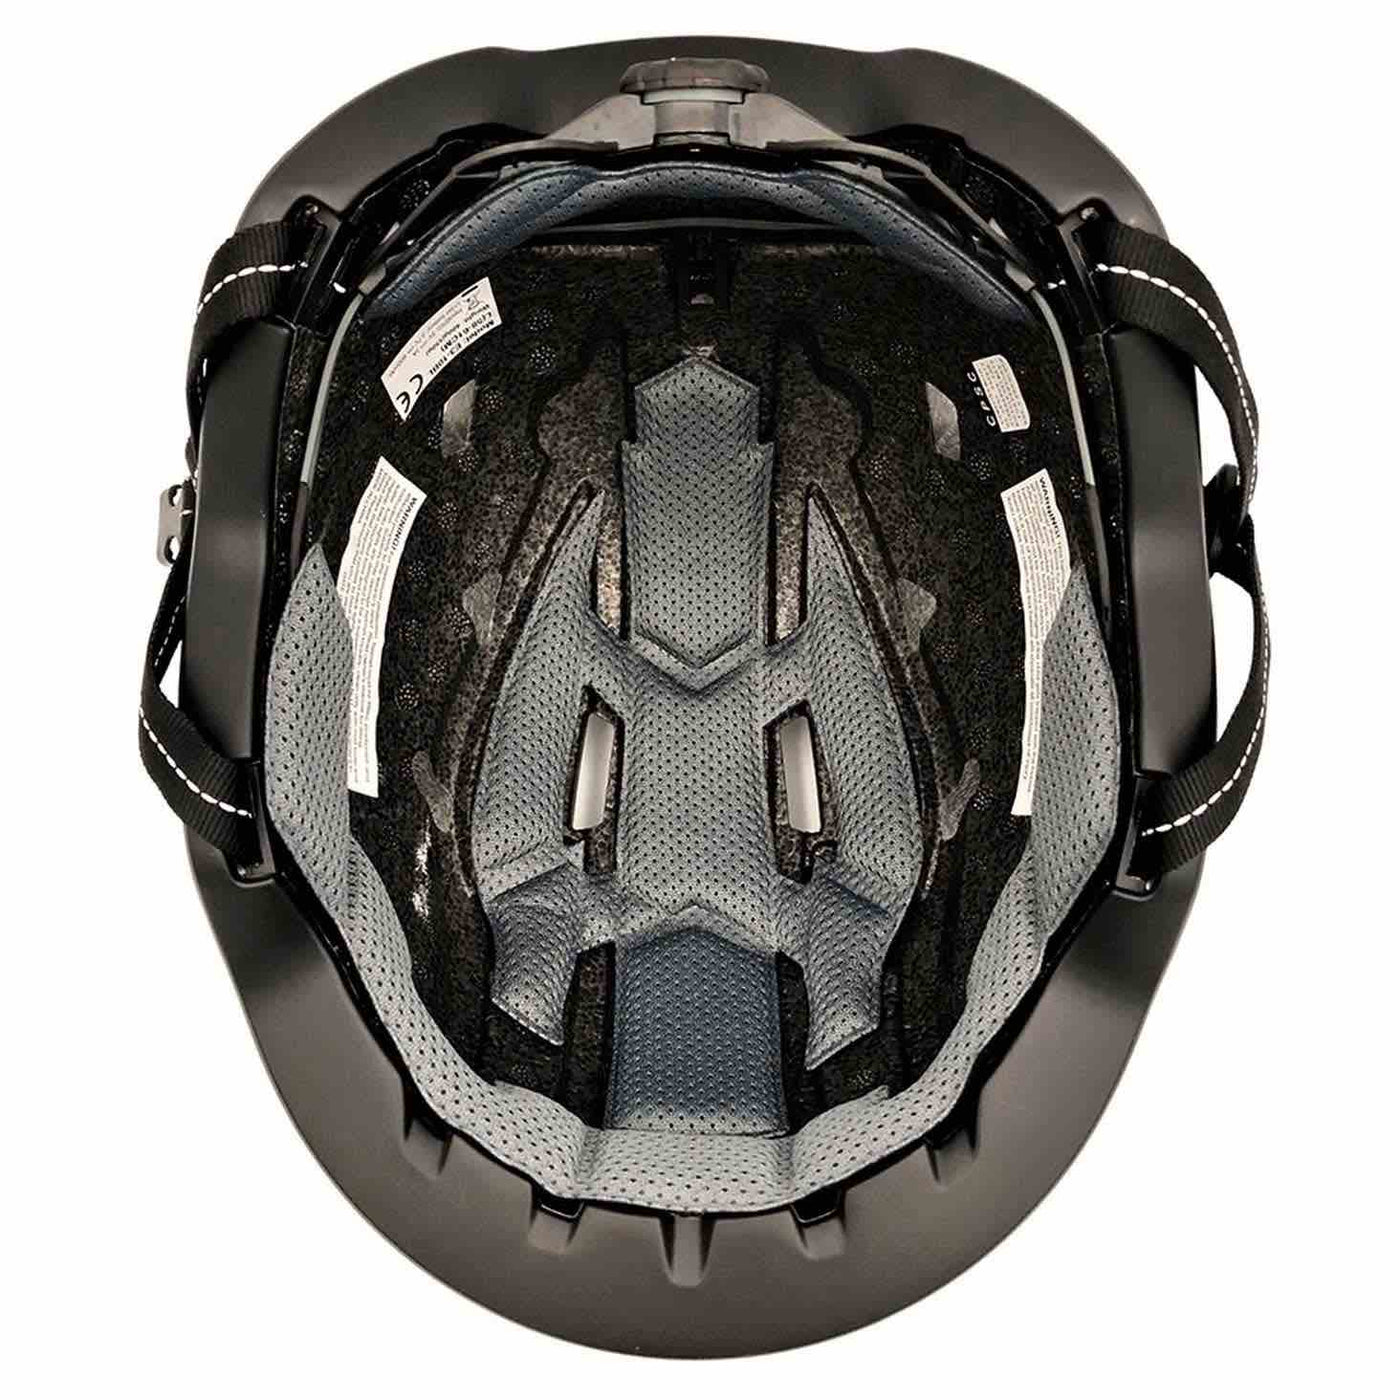 inside view of adjustable ebike helmet